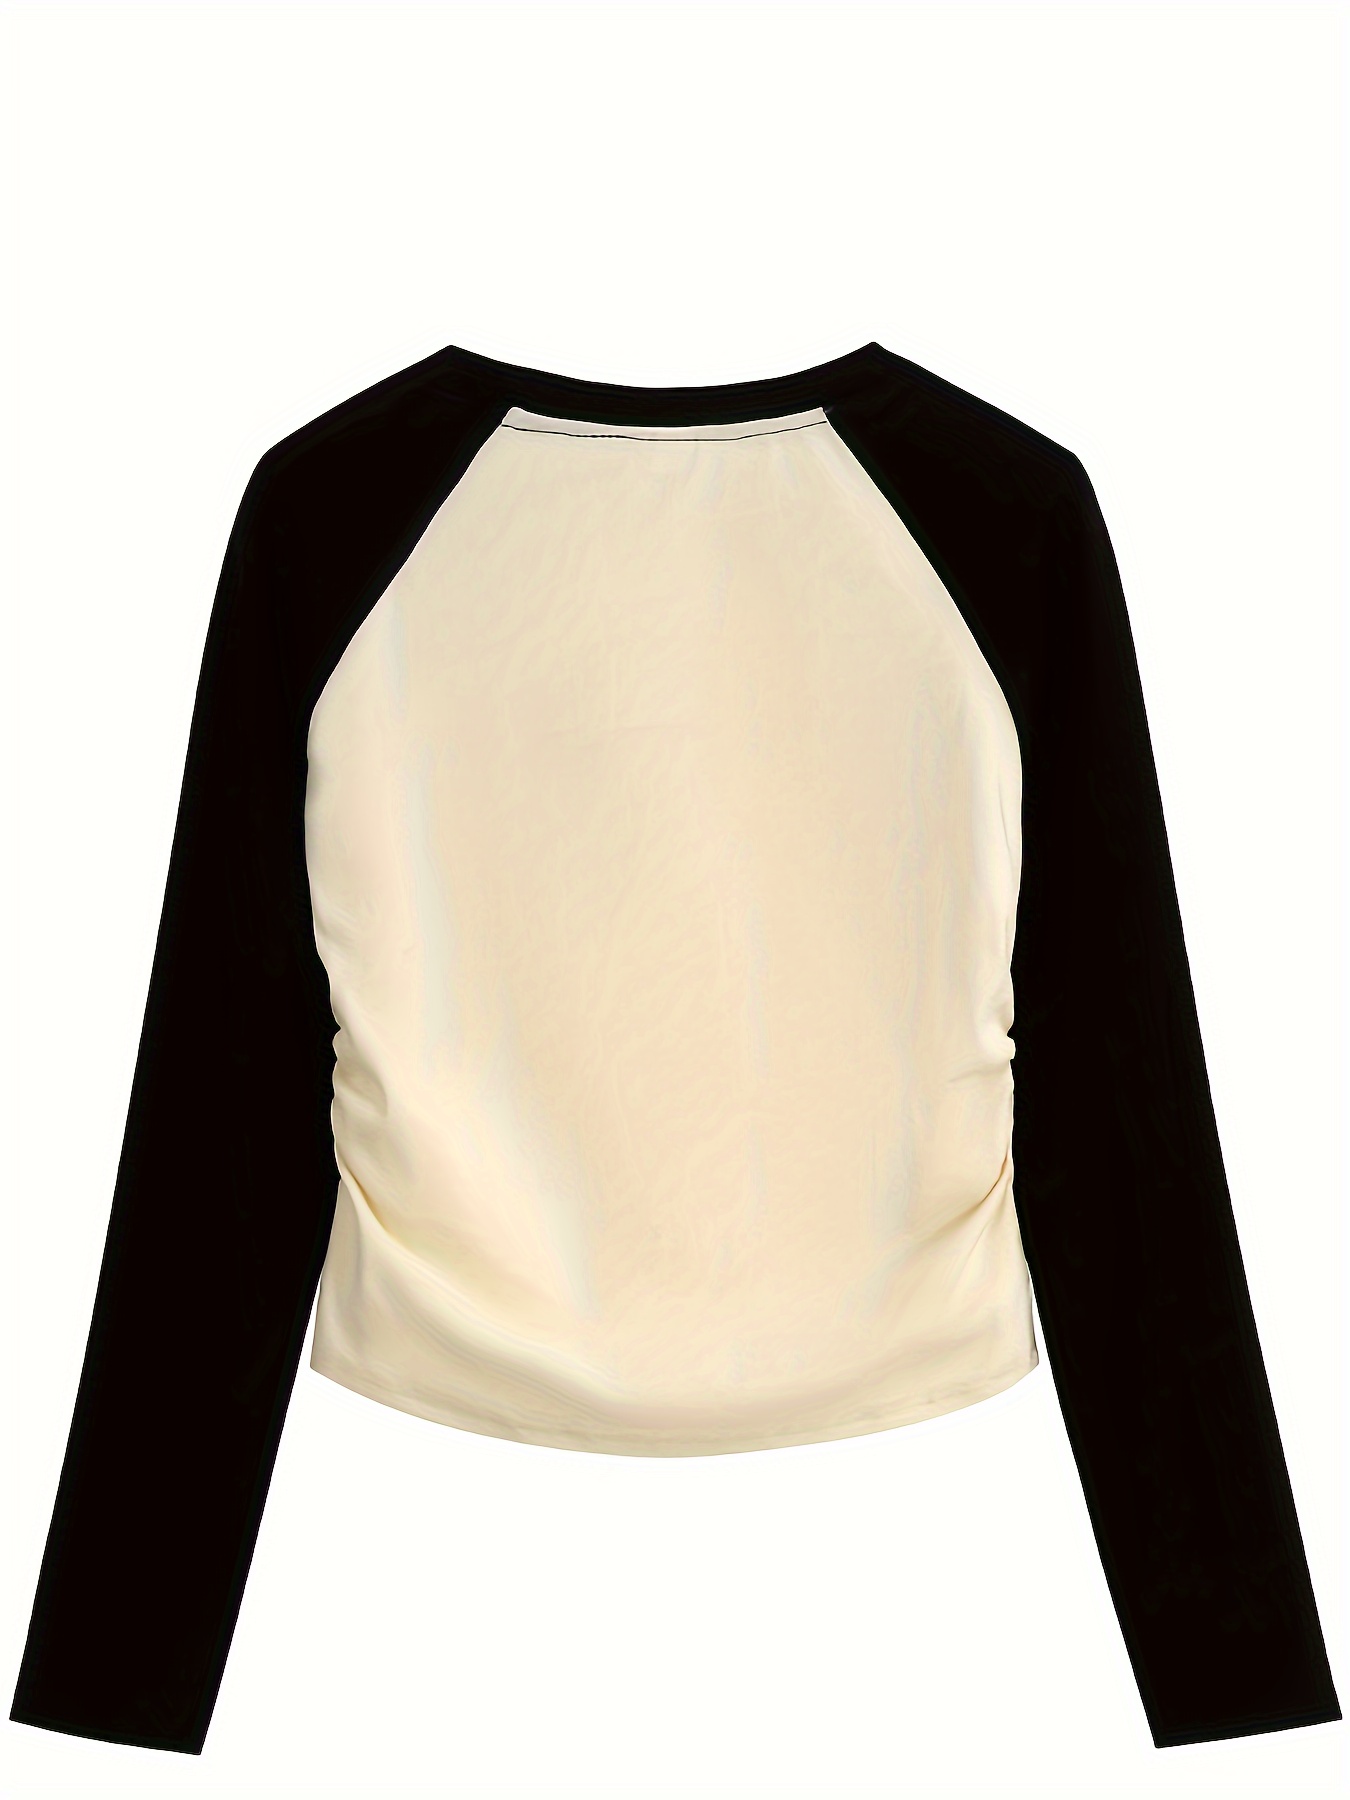 Women's White Long Sleeve Crop Top, Black White Beige